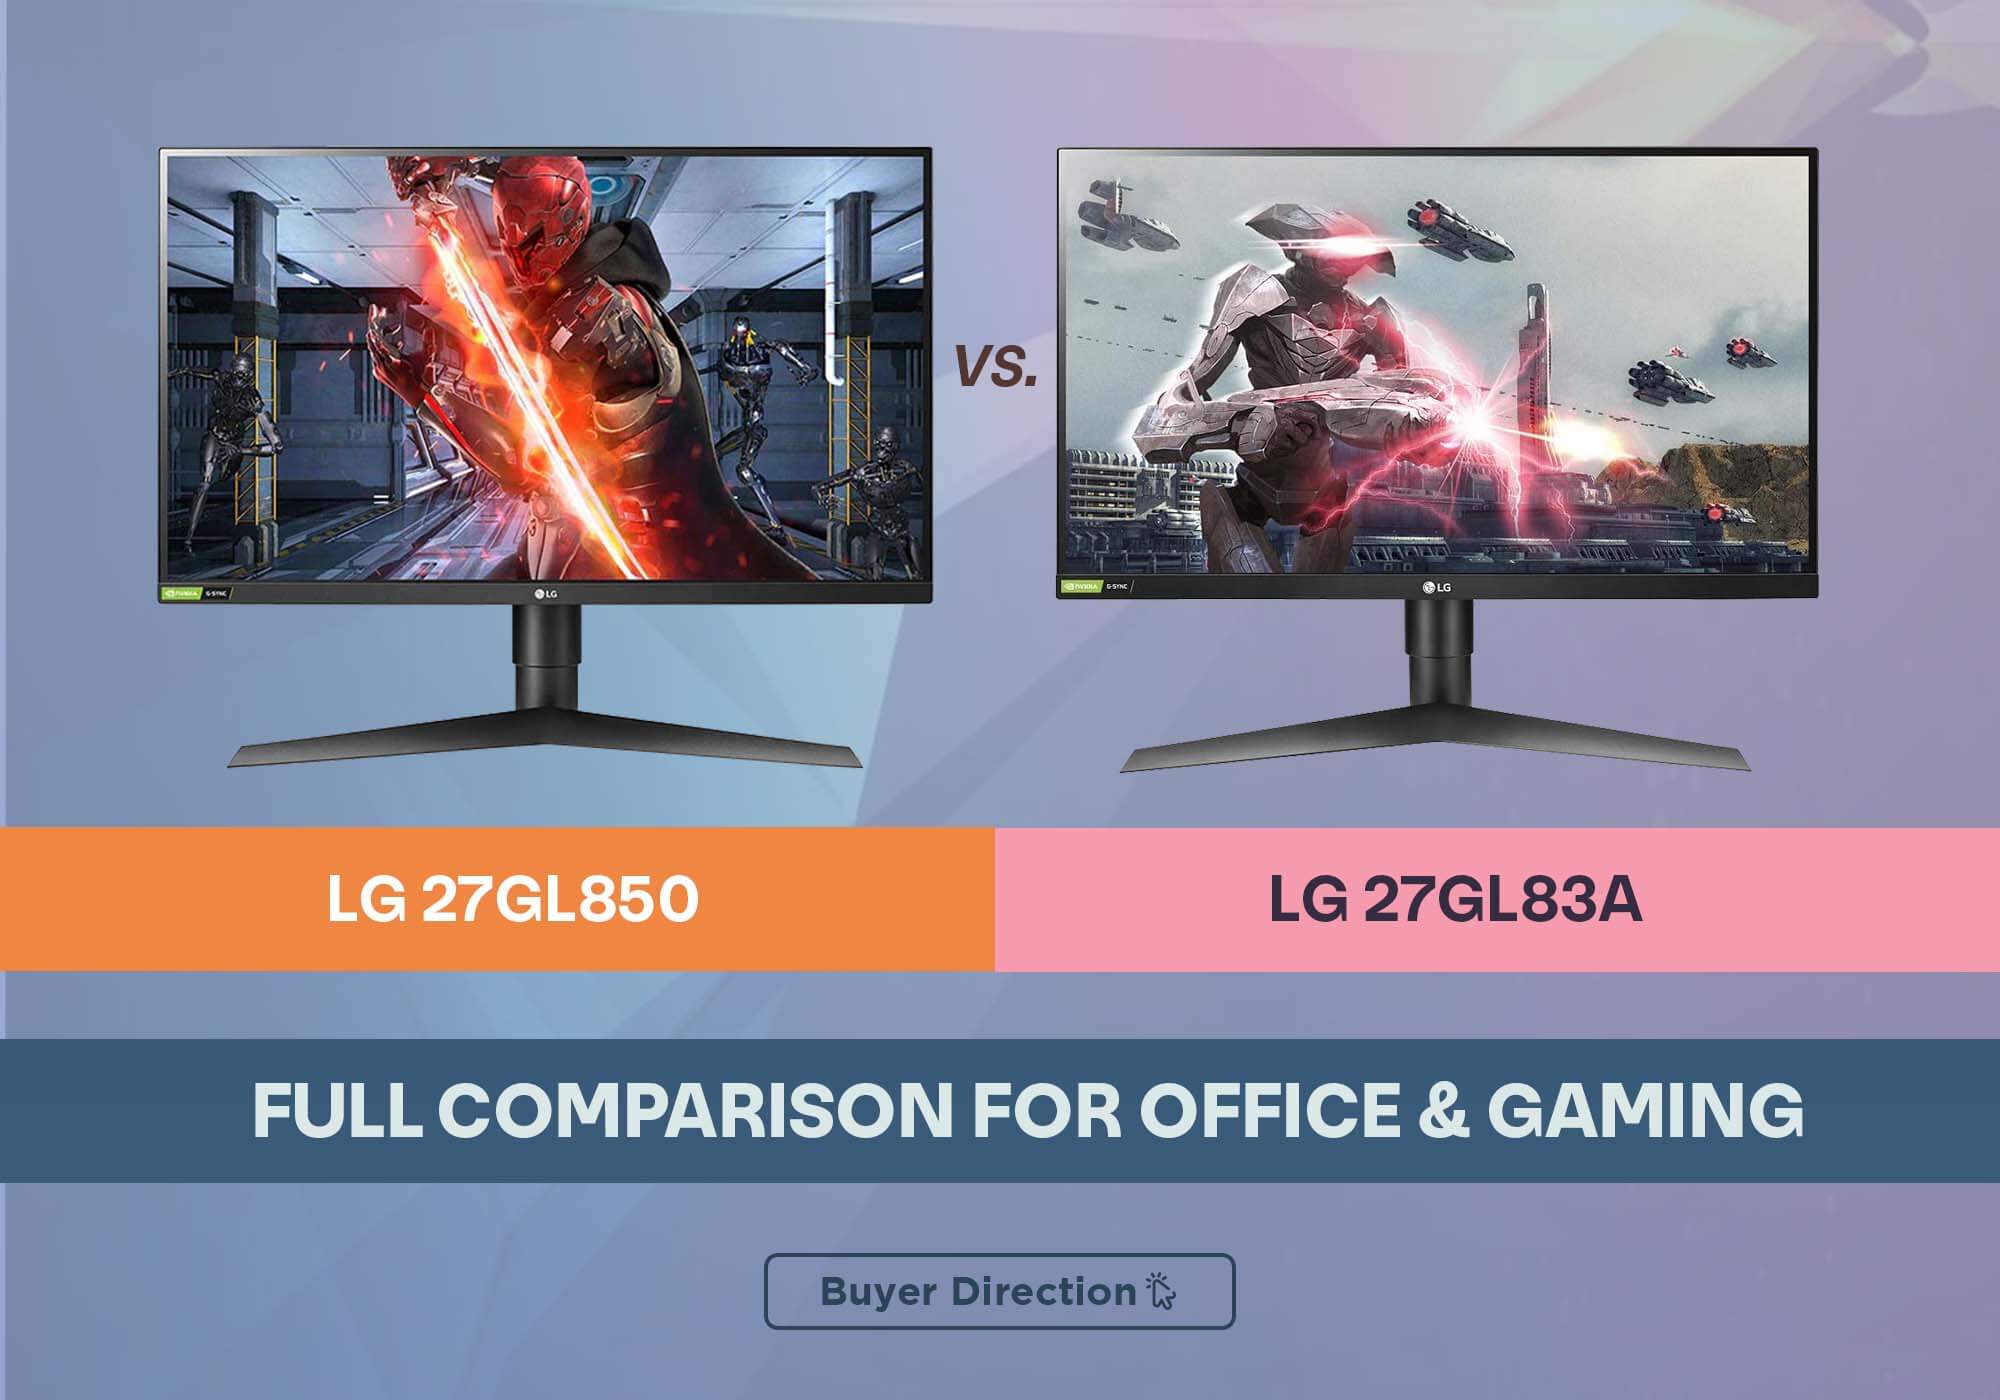 LG 27gl850 vs. LG 27gl83a Full Comparison for Office & Gaming